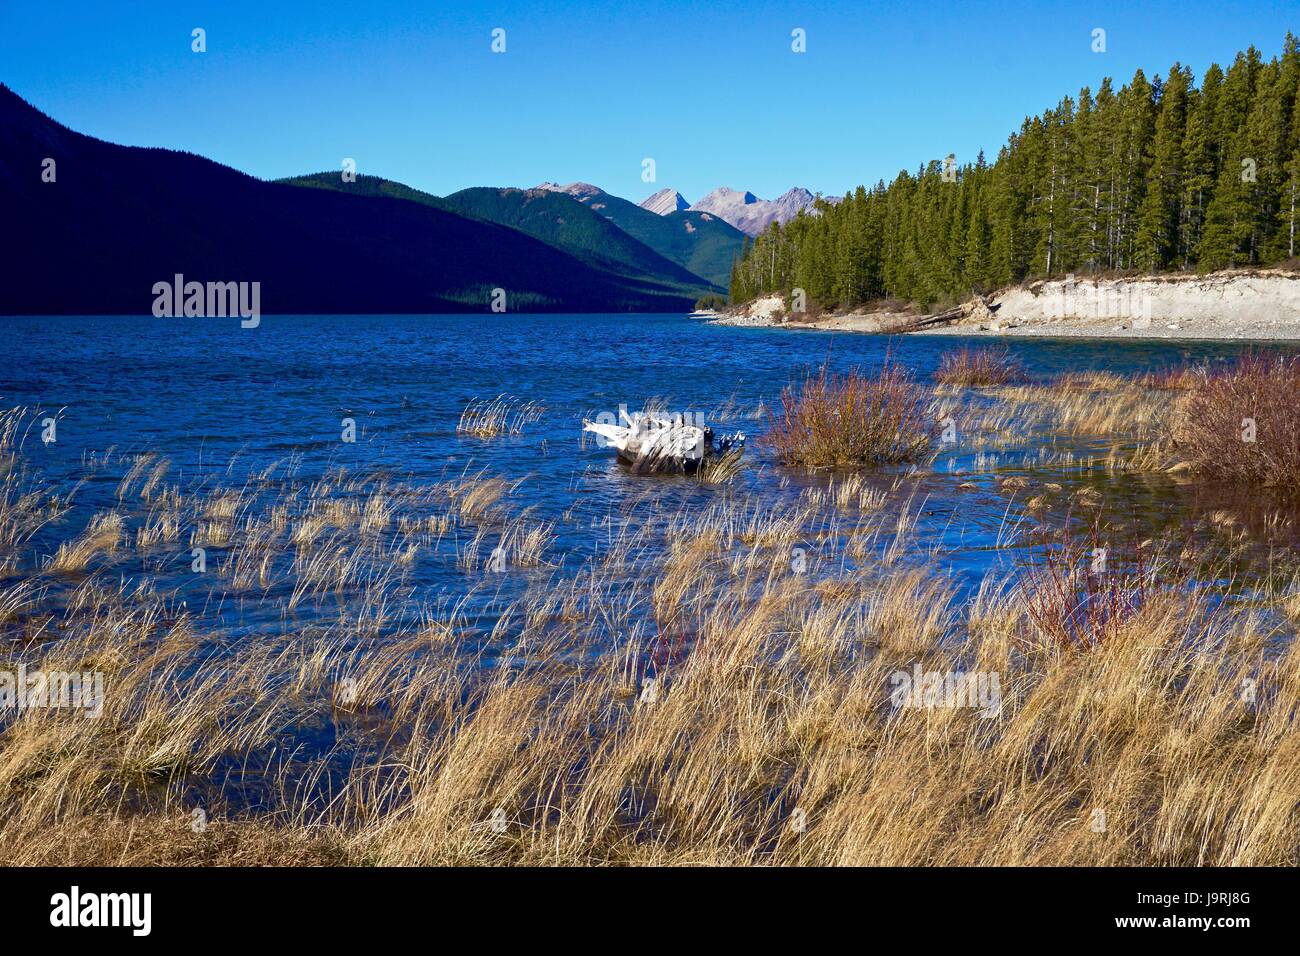 Marshy shore of mountain lake Stock Photo